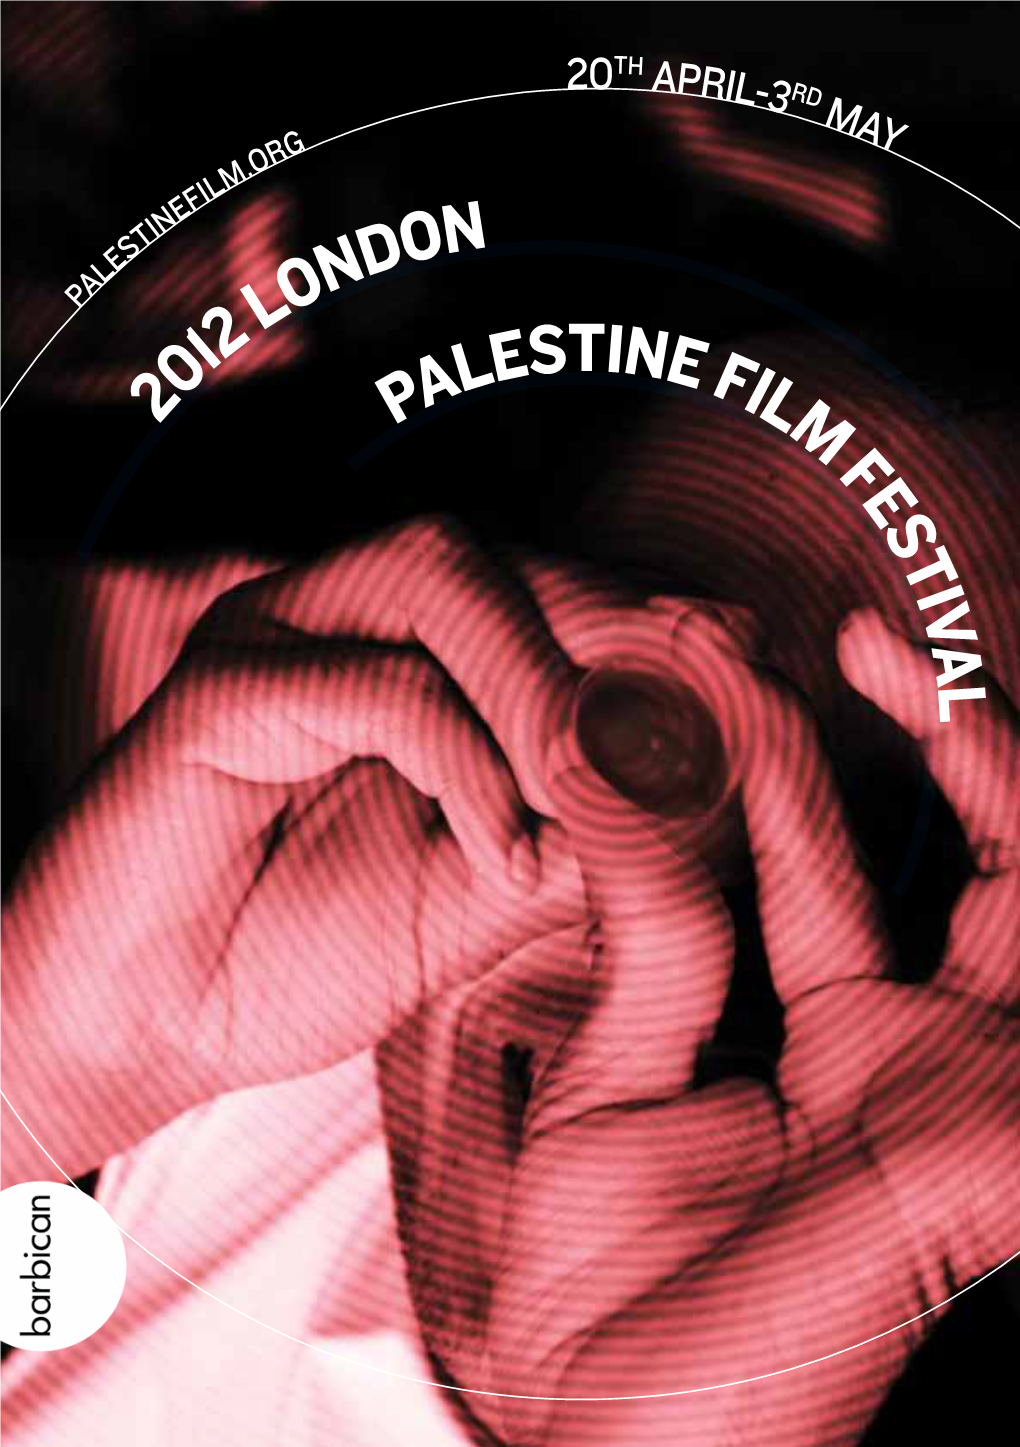 Palestine Film Festival 2012 London